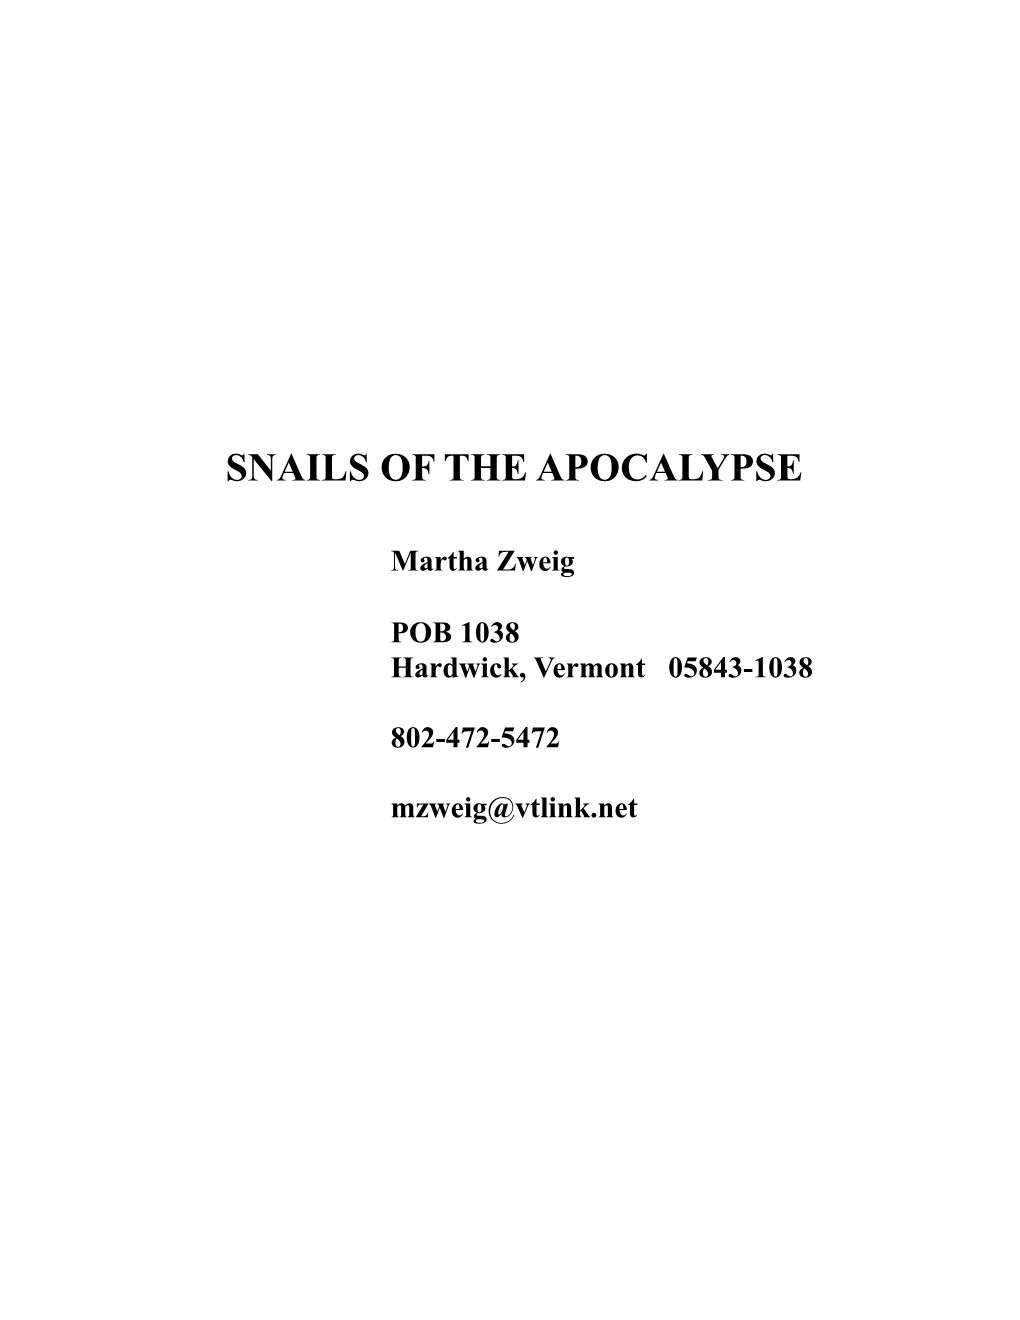 Snails of the Apocalypse